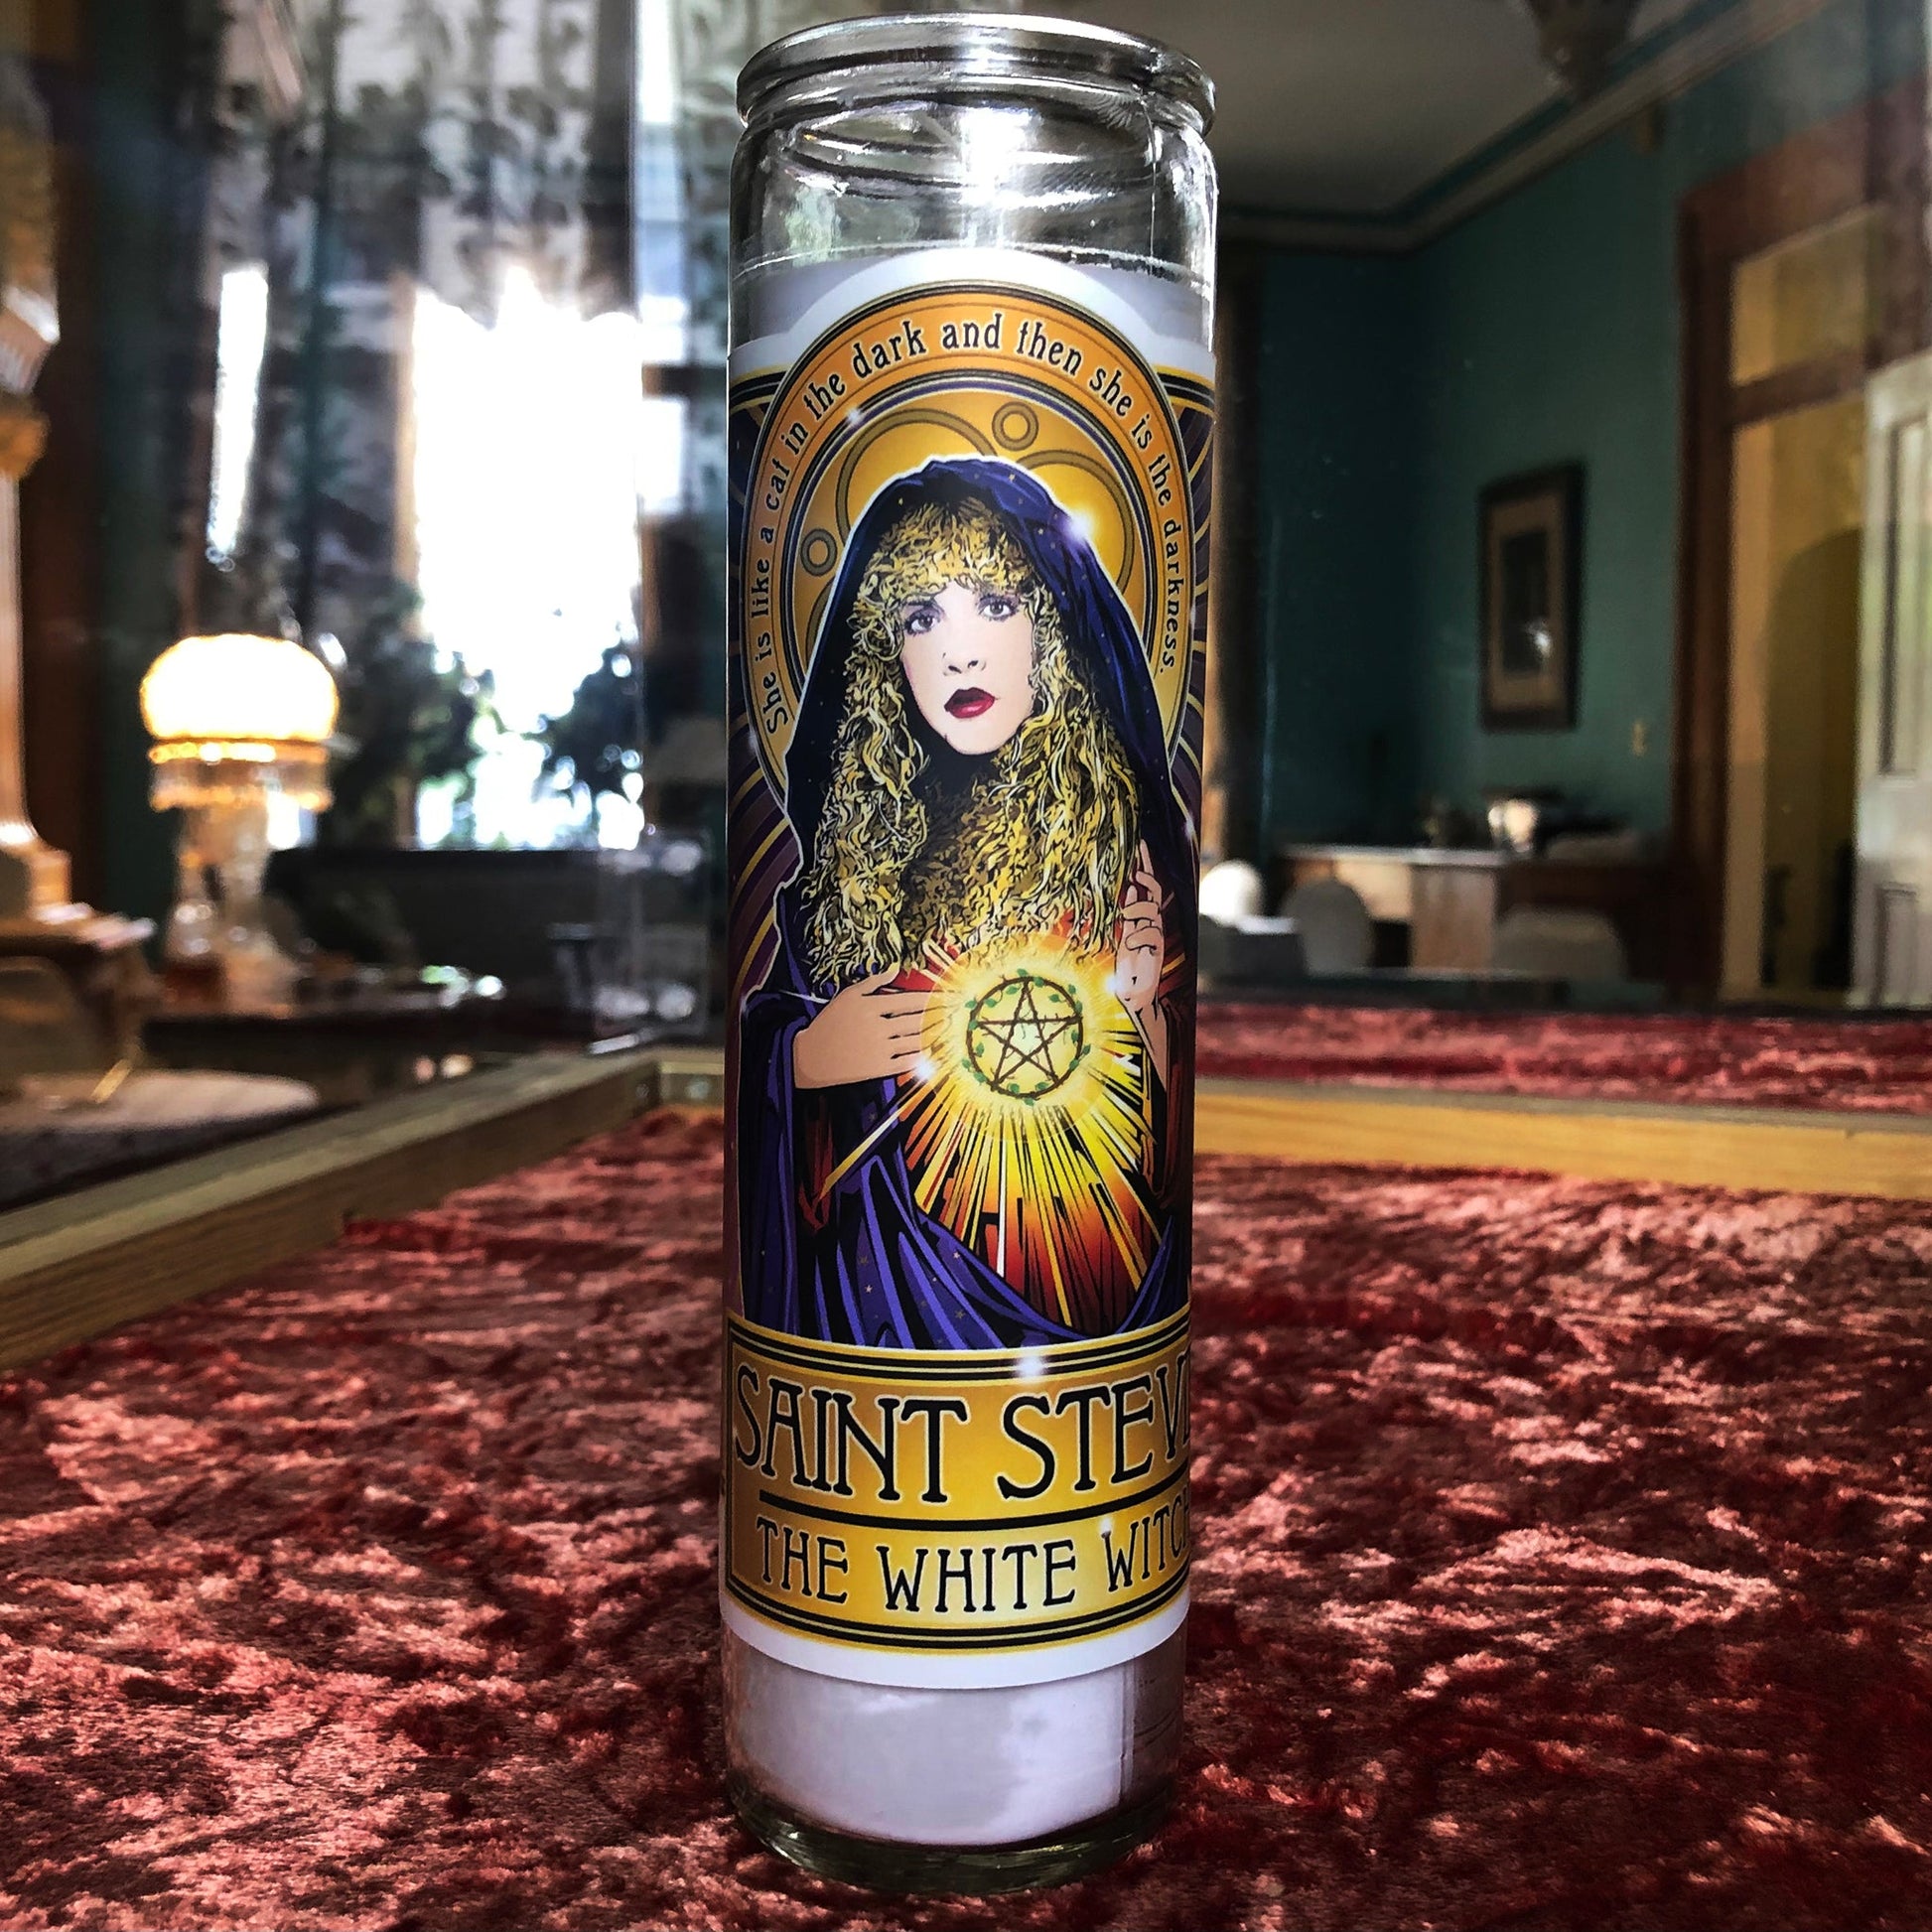 Saint Stevie The White Witch Candle Cleaverandblade.com